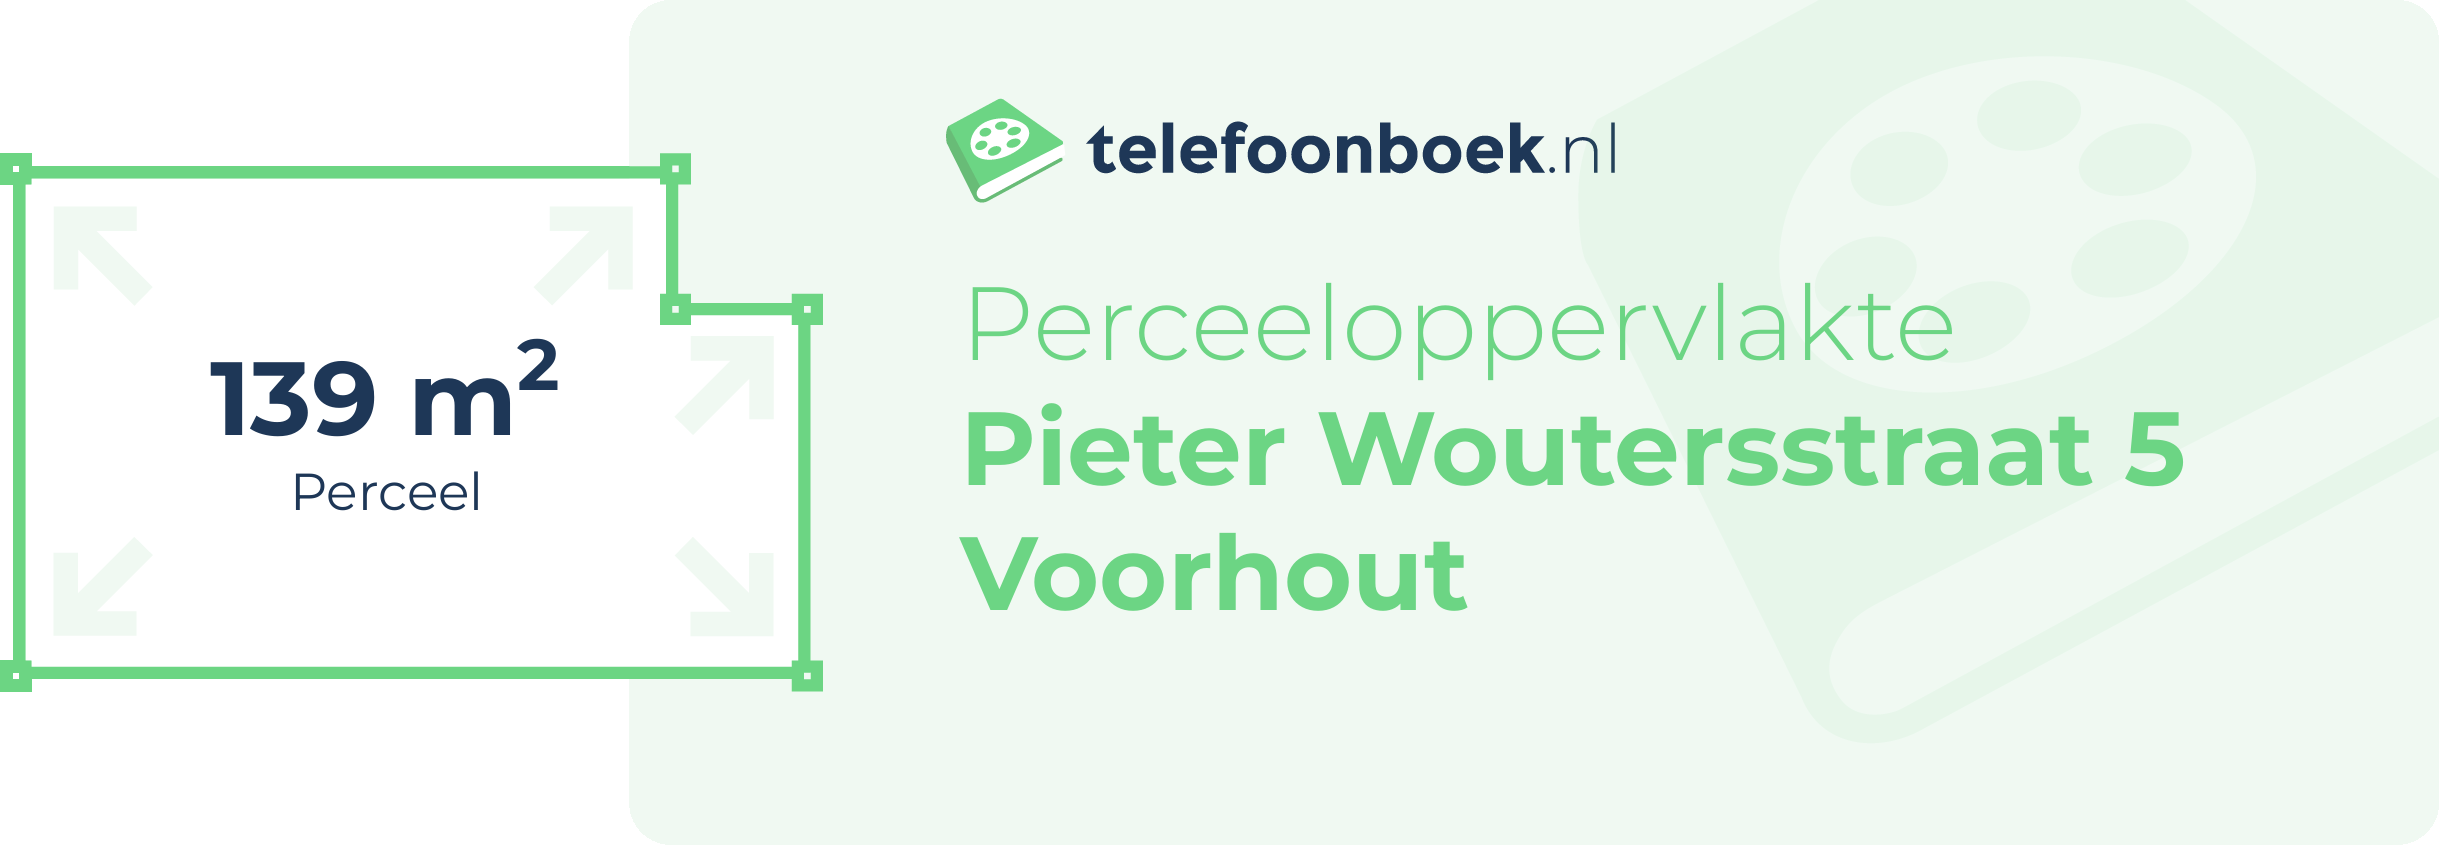 Perceeloppervlakte Pieter Woutersstraat 5 Voorhout